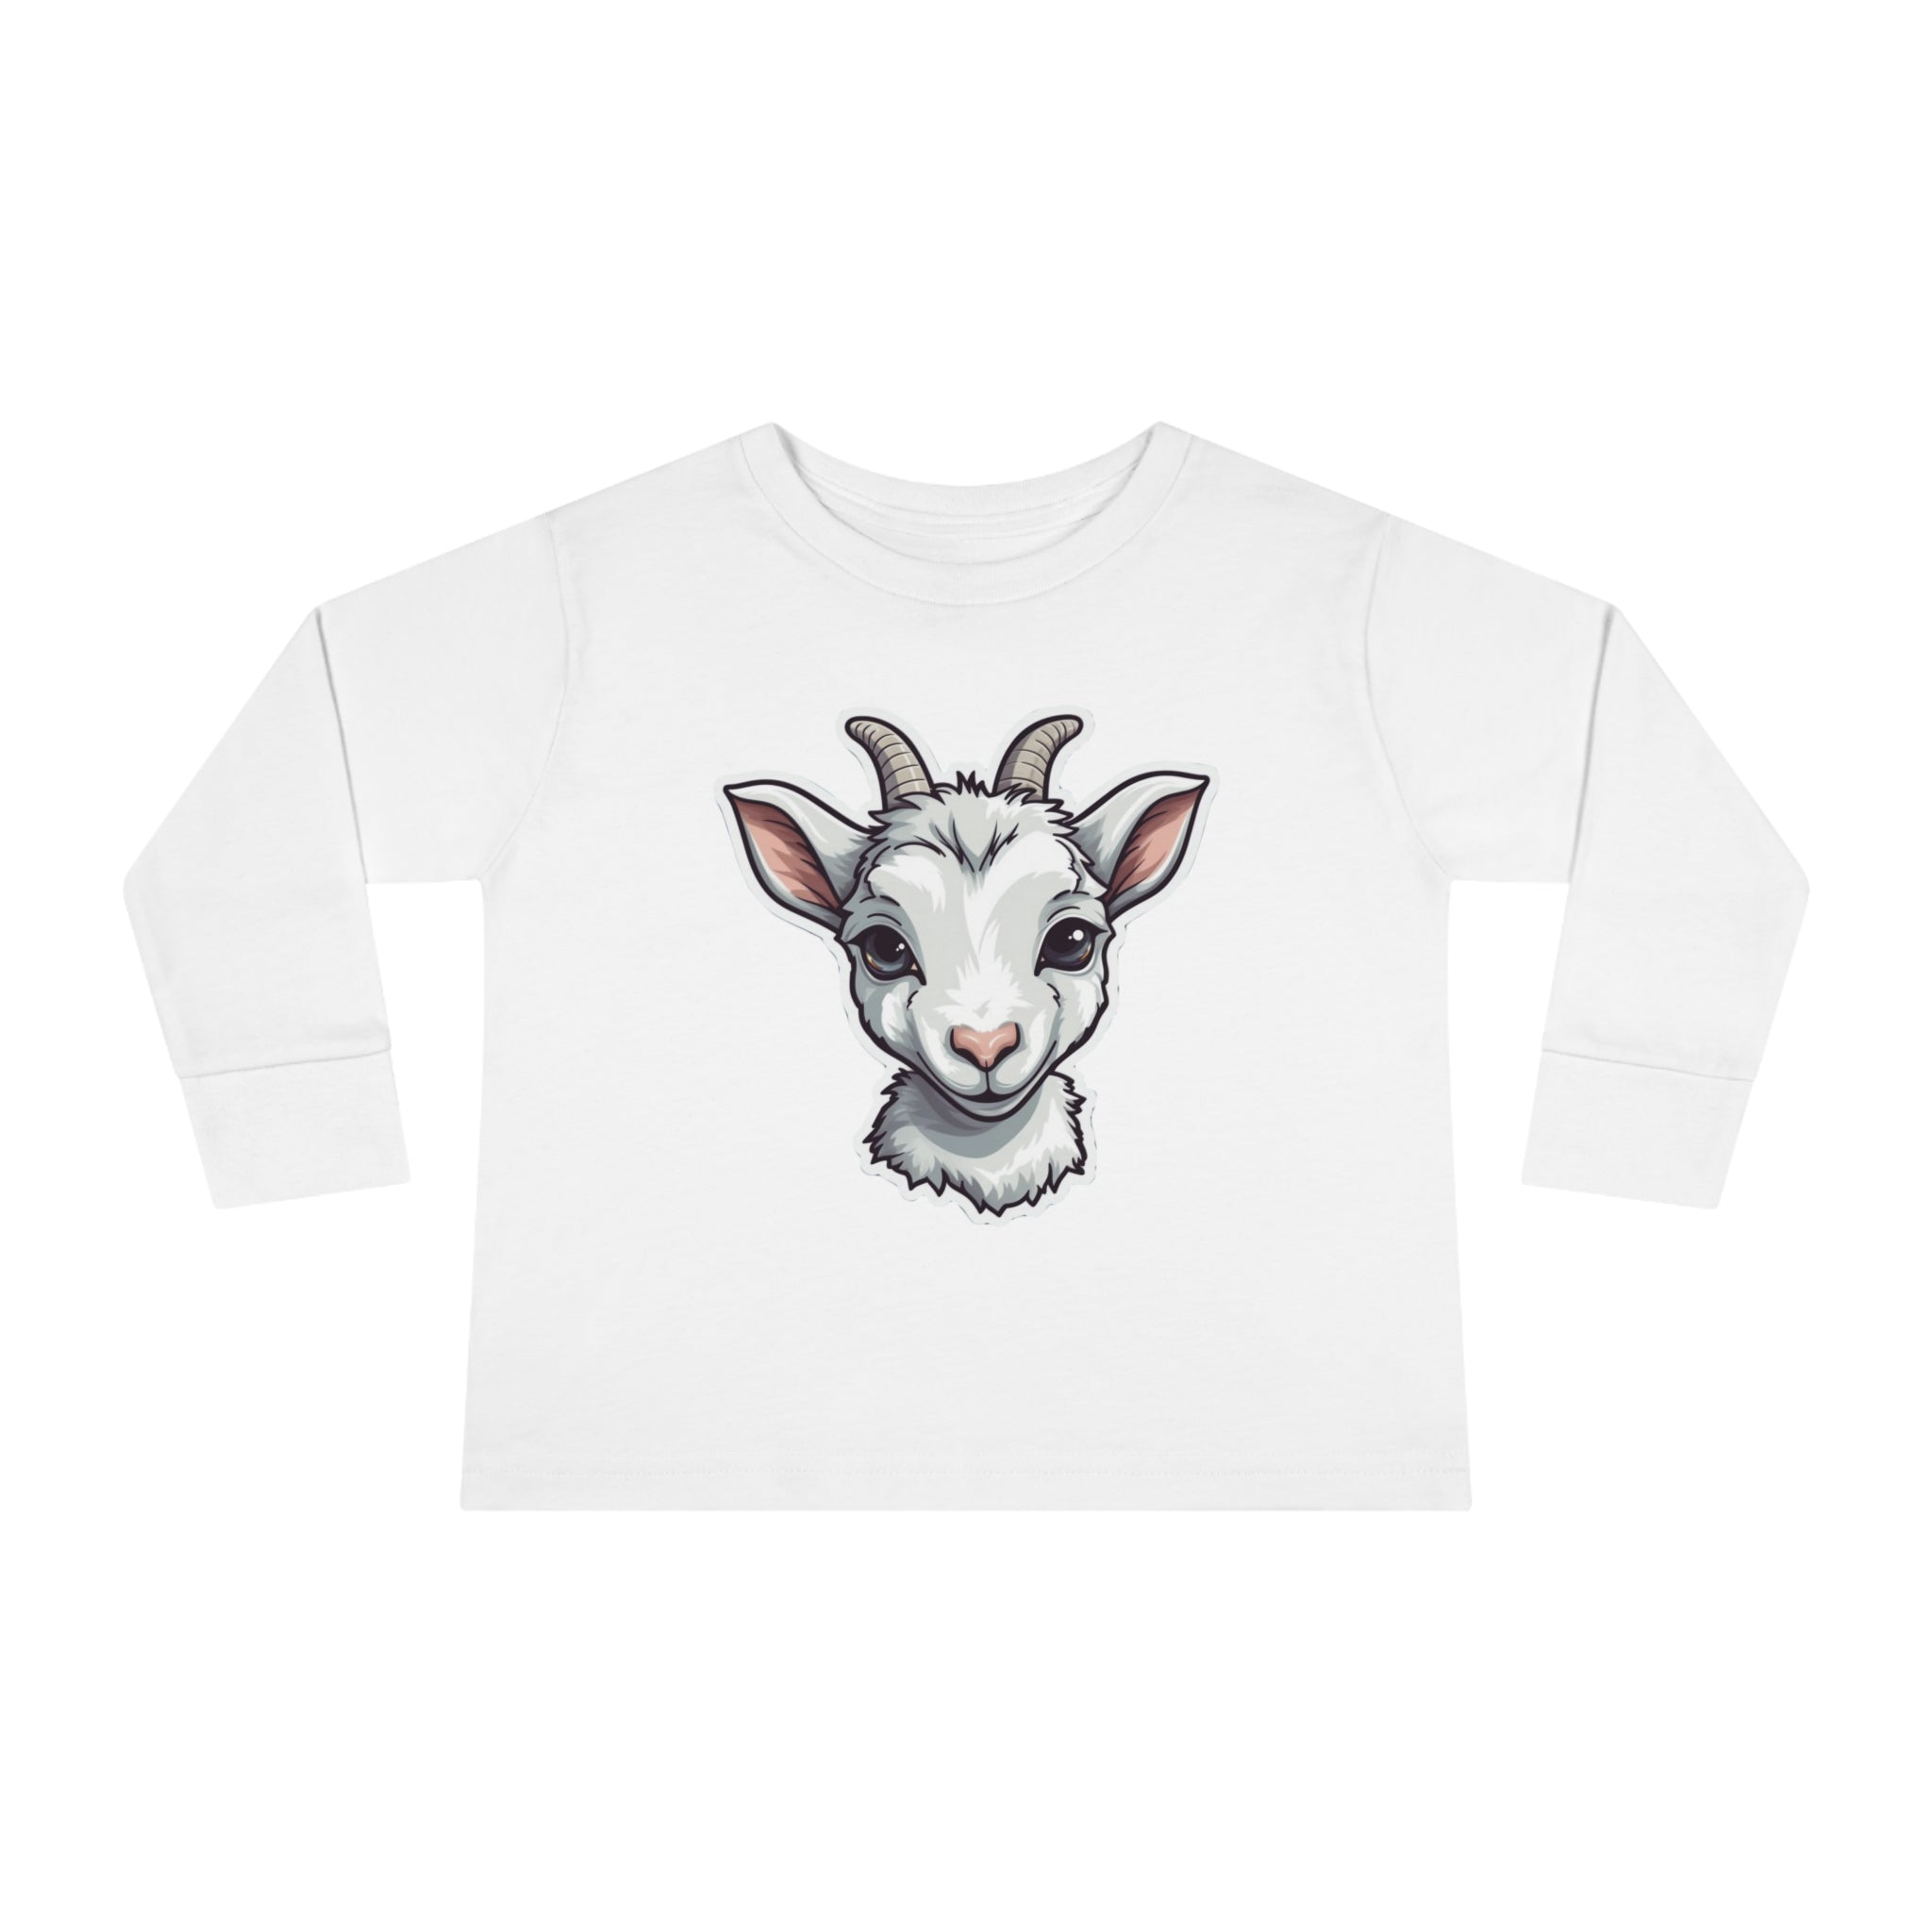 Toddler Long Sleeve Tee - Goat Kid